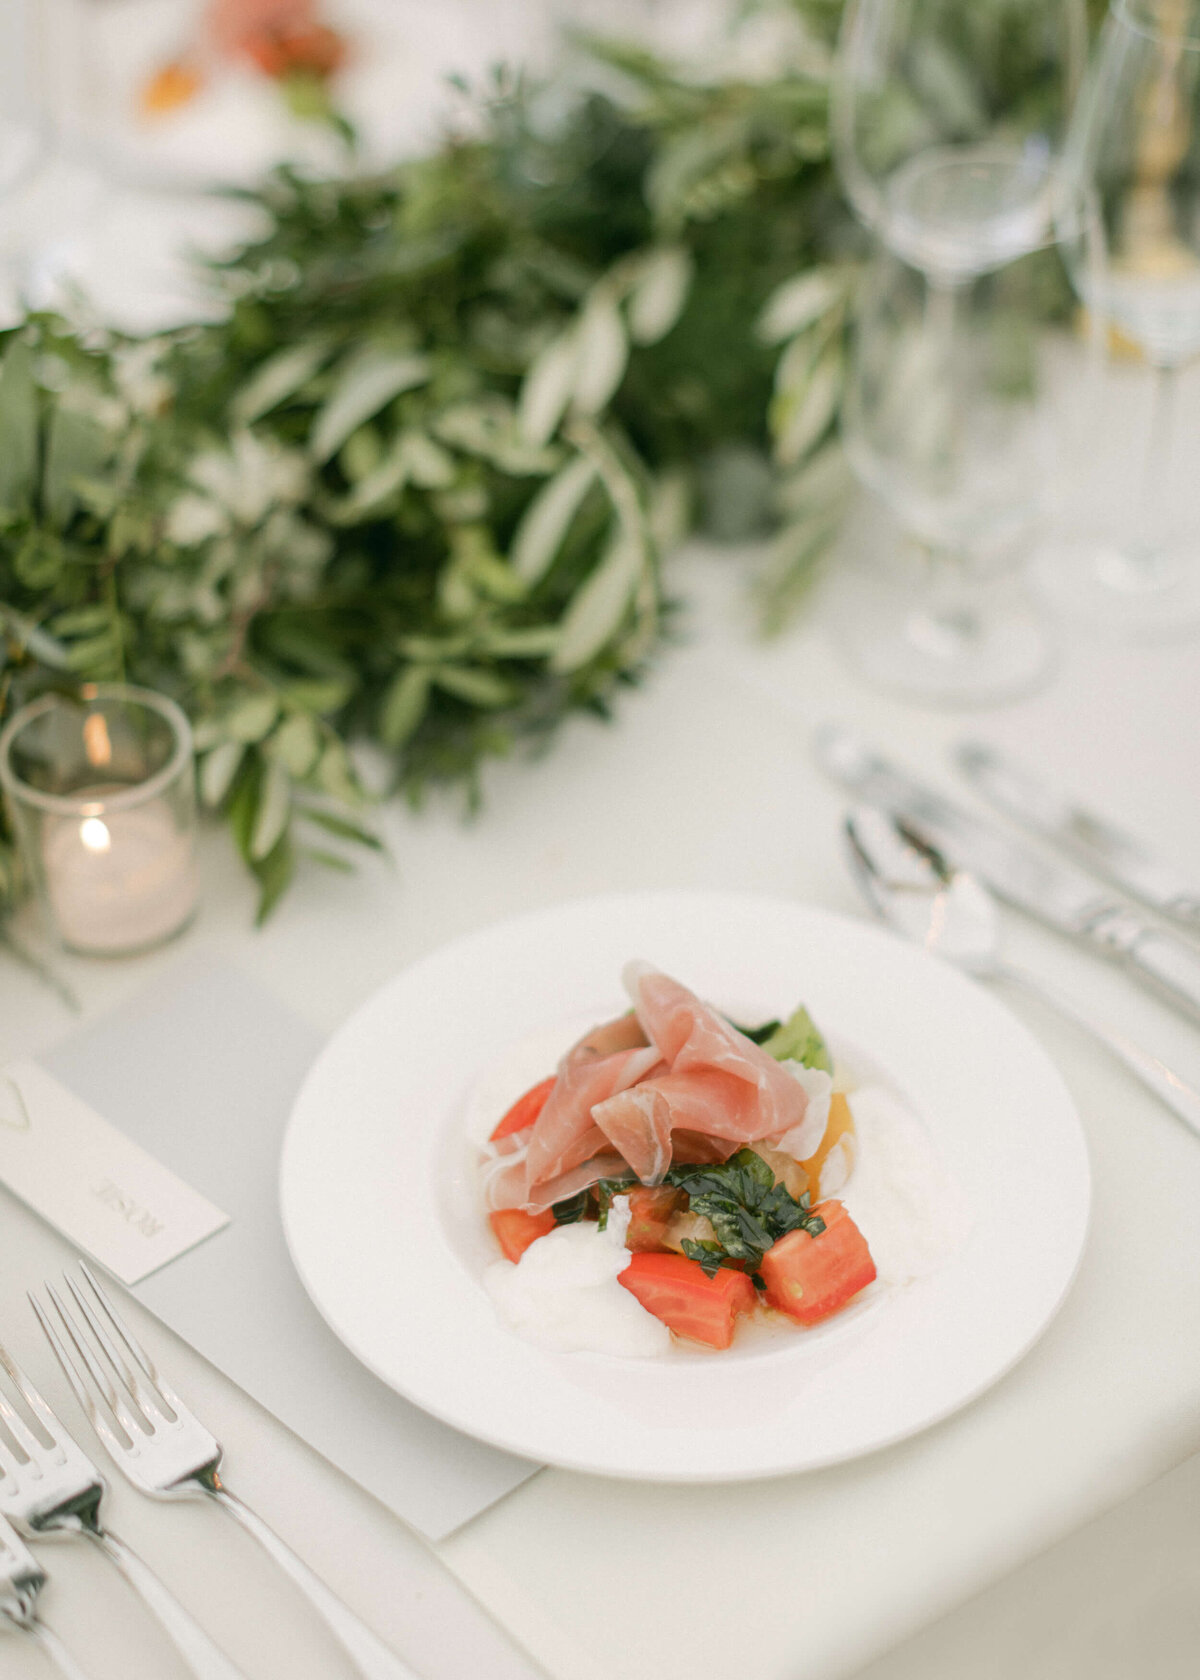 chloe-winstanley-weddings-dinner-main-course